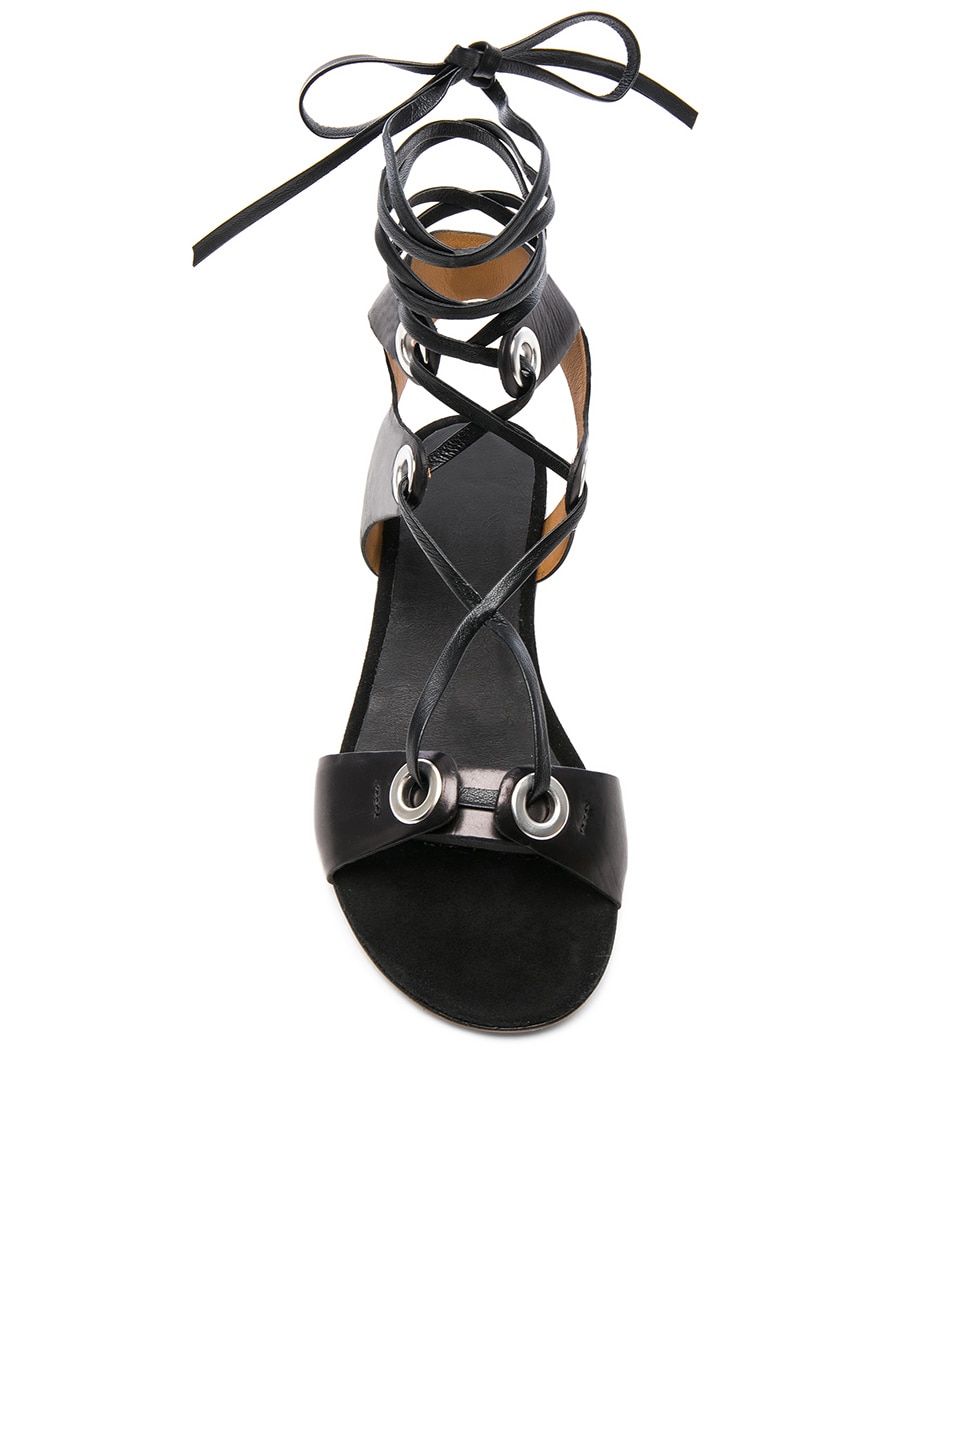 Isabel Marant Leather Jaysta Sandals in Black & Silver | FWRD